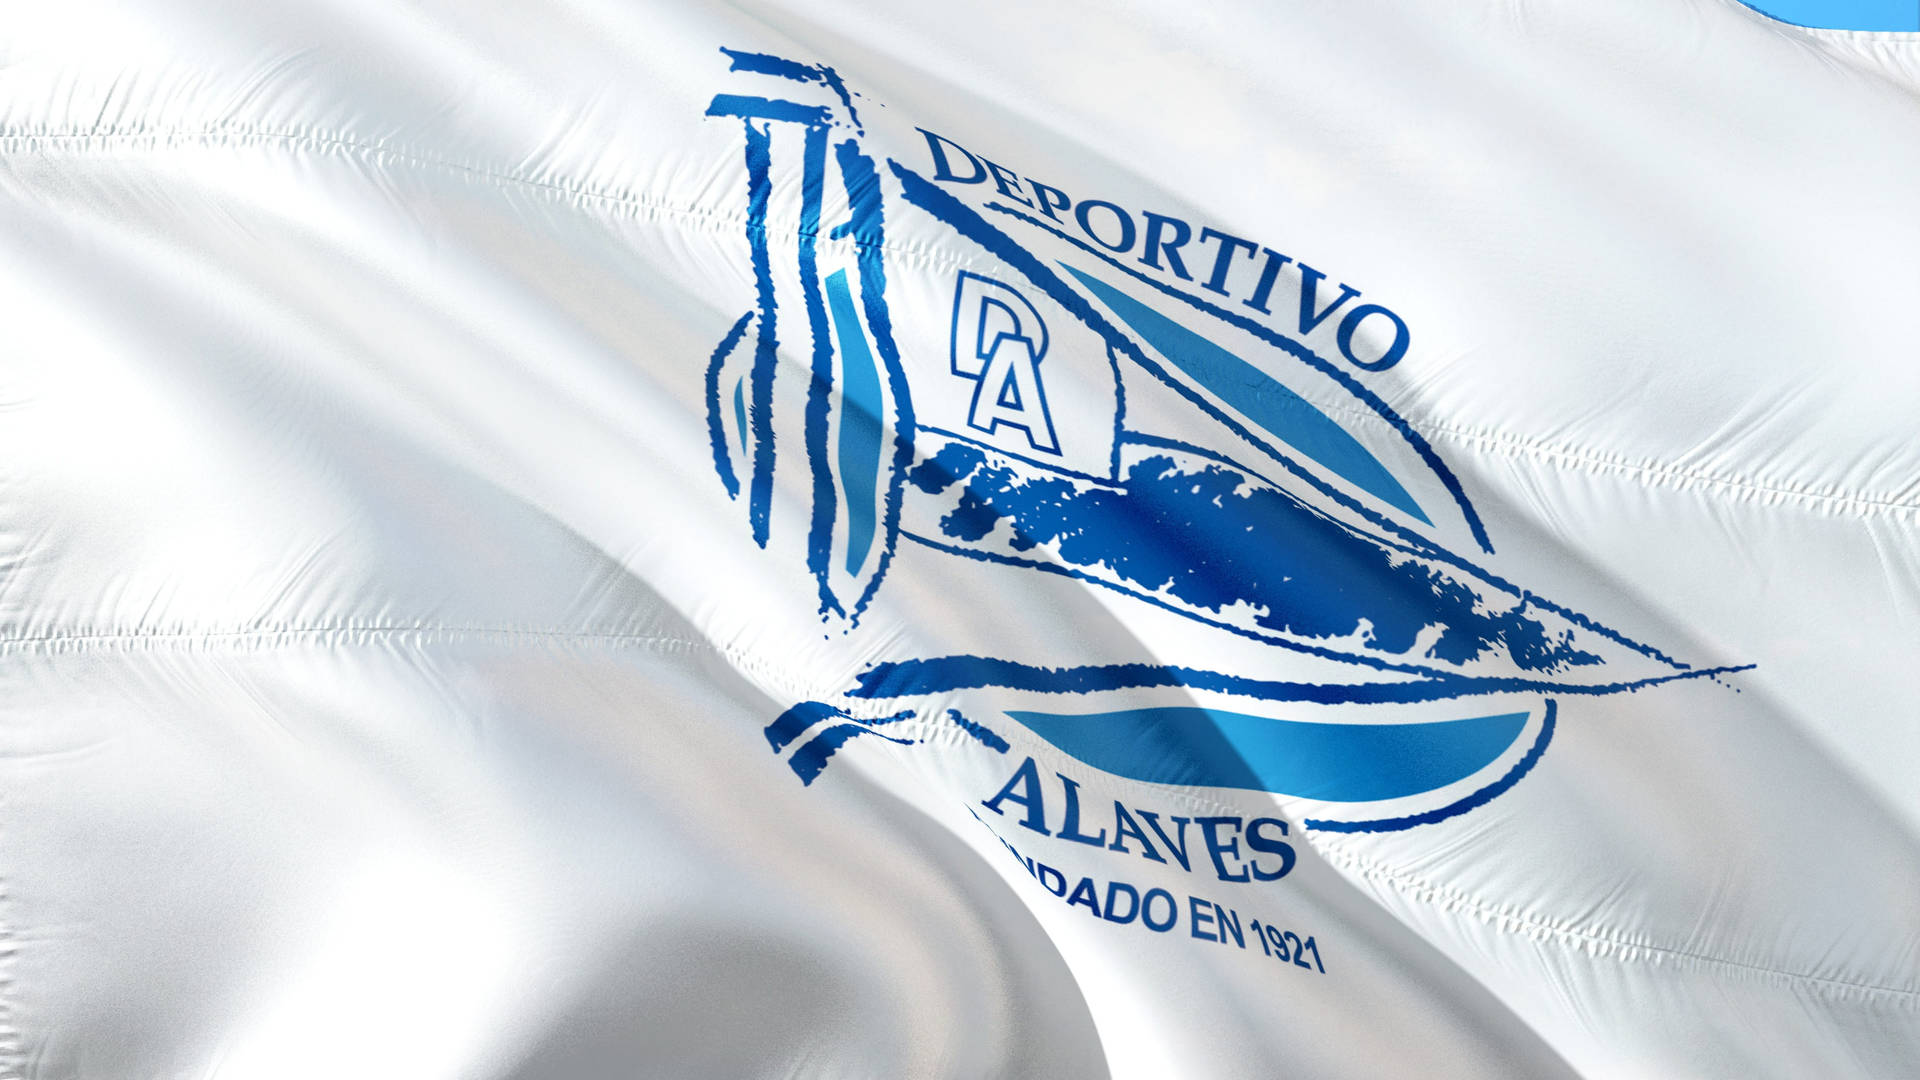 La Liga Deportivo Alavés Flag Background